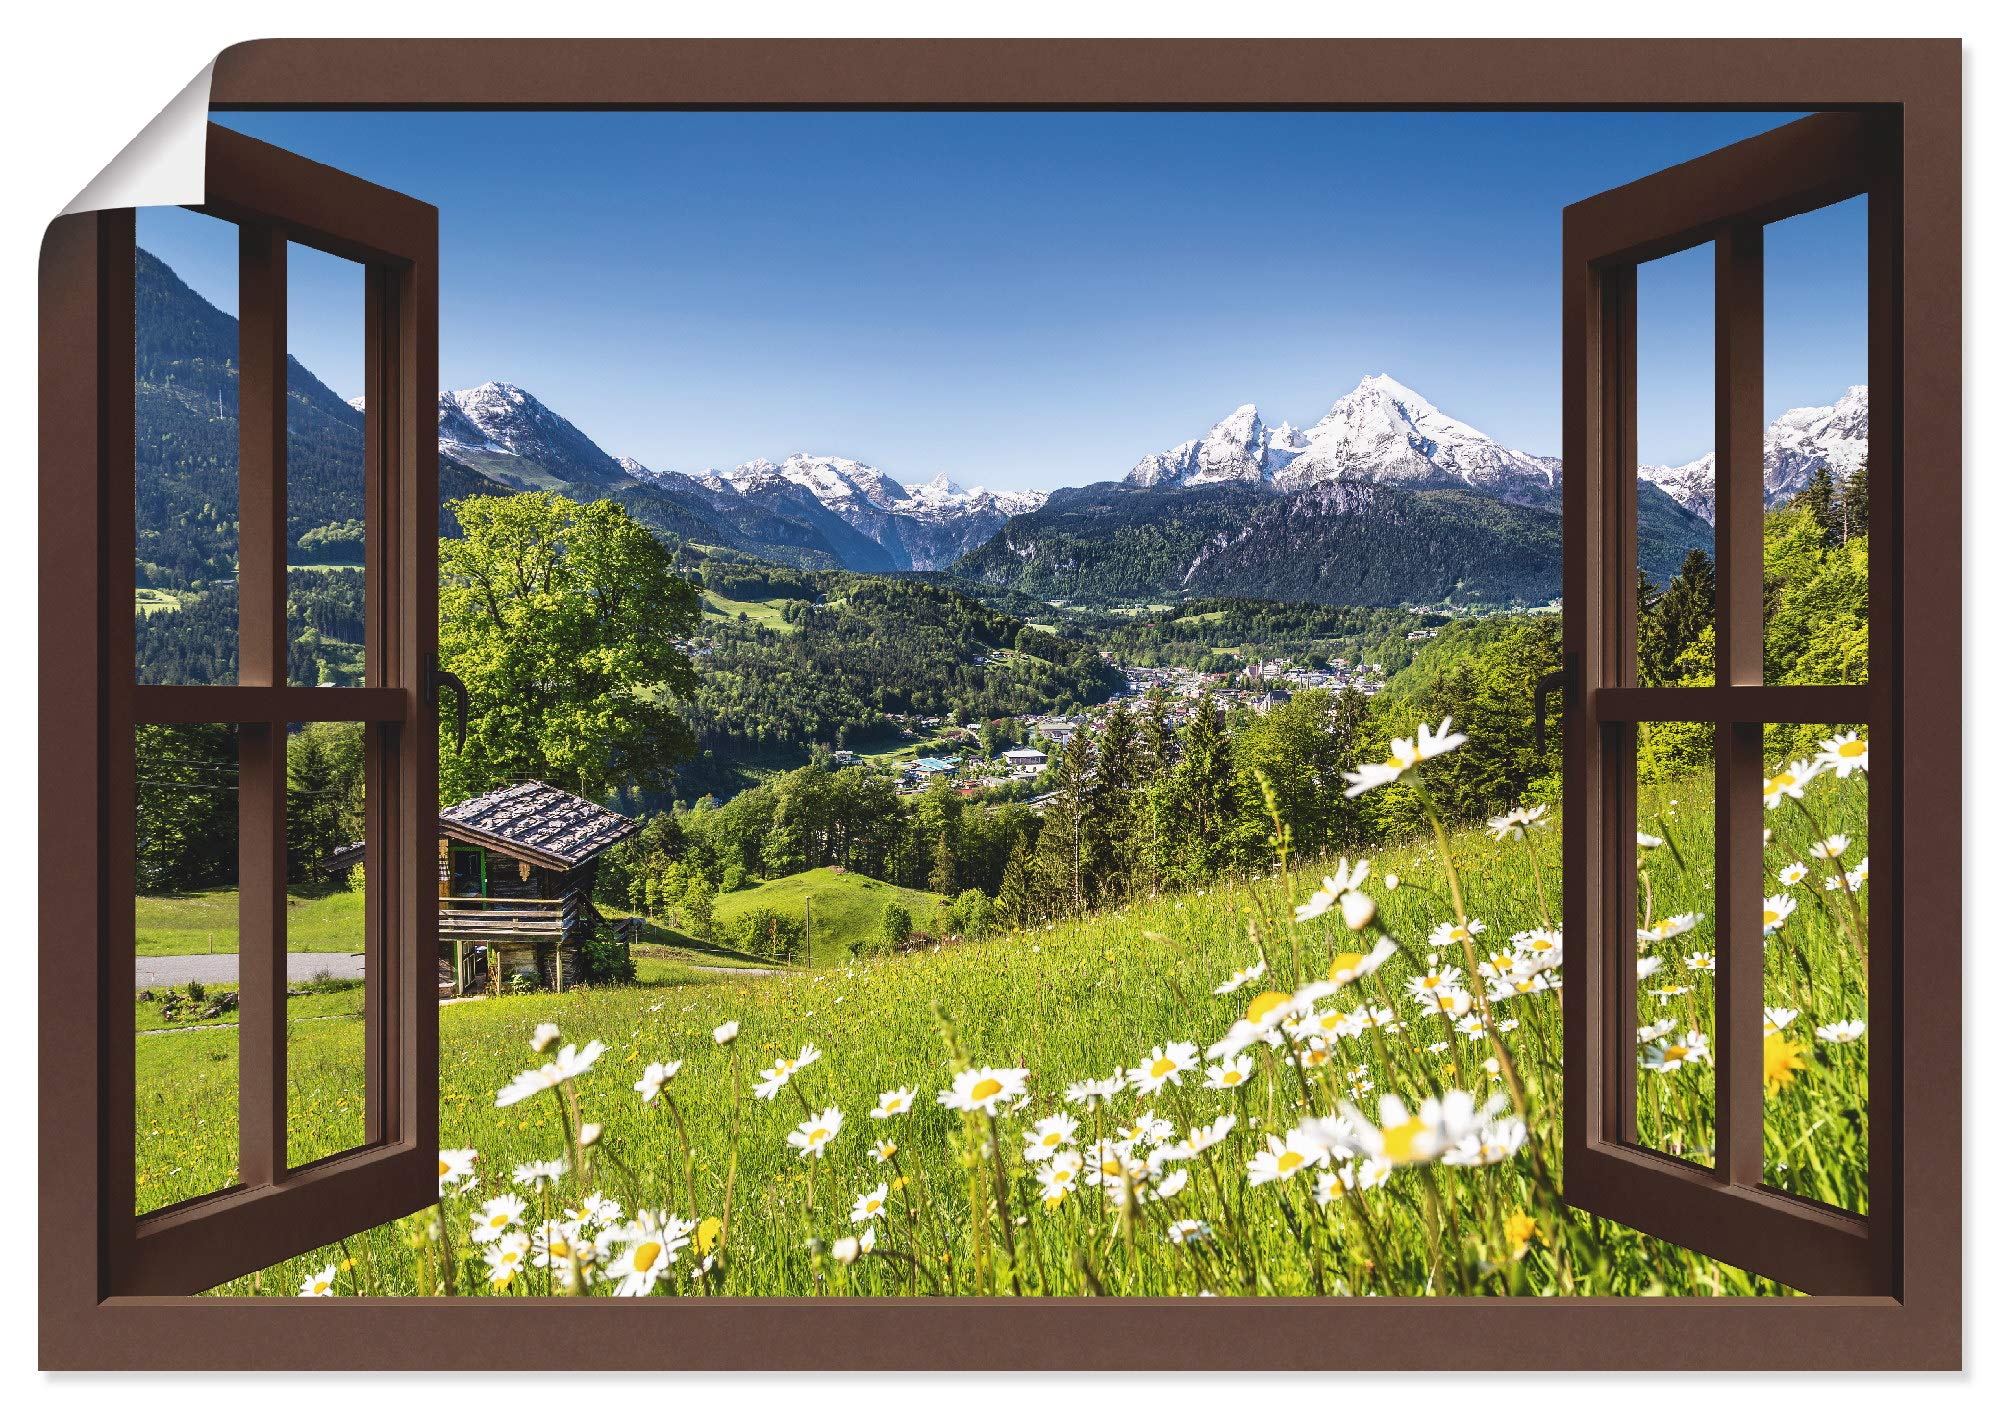 ARTland Poster Kunstdruck Wandposter Bild ohne Rahmen 70x50 cm Fensterblick Fenster Alpen Landschaft Berge Wald Gebirge Wiese Natur T5TP